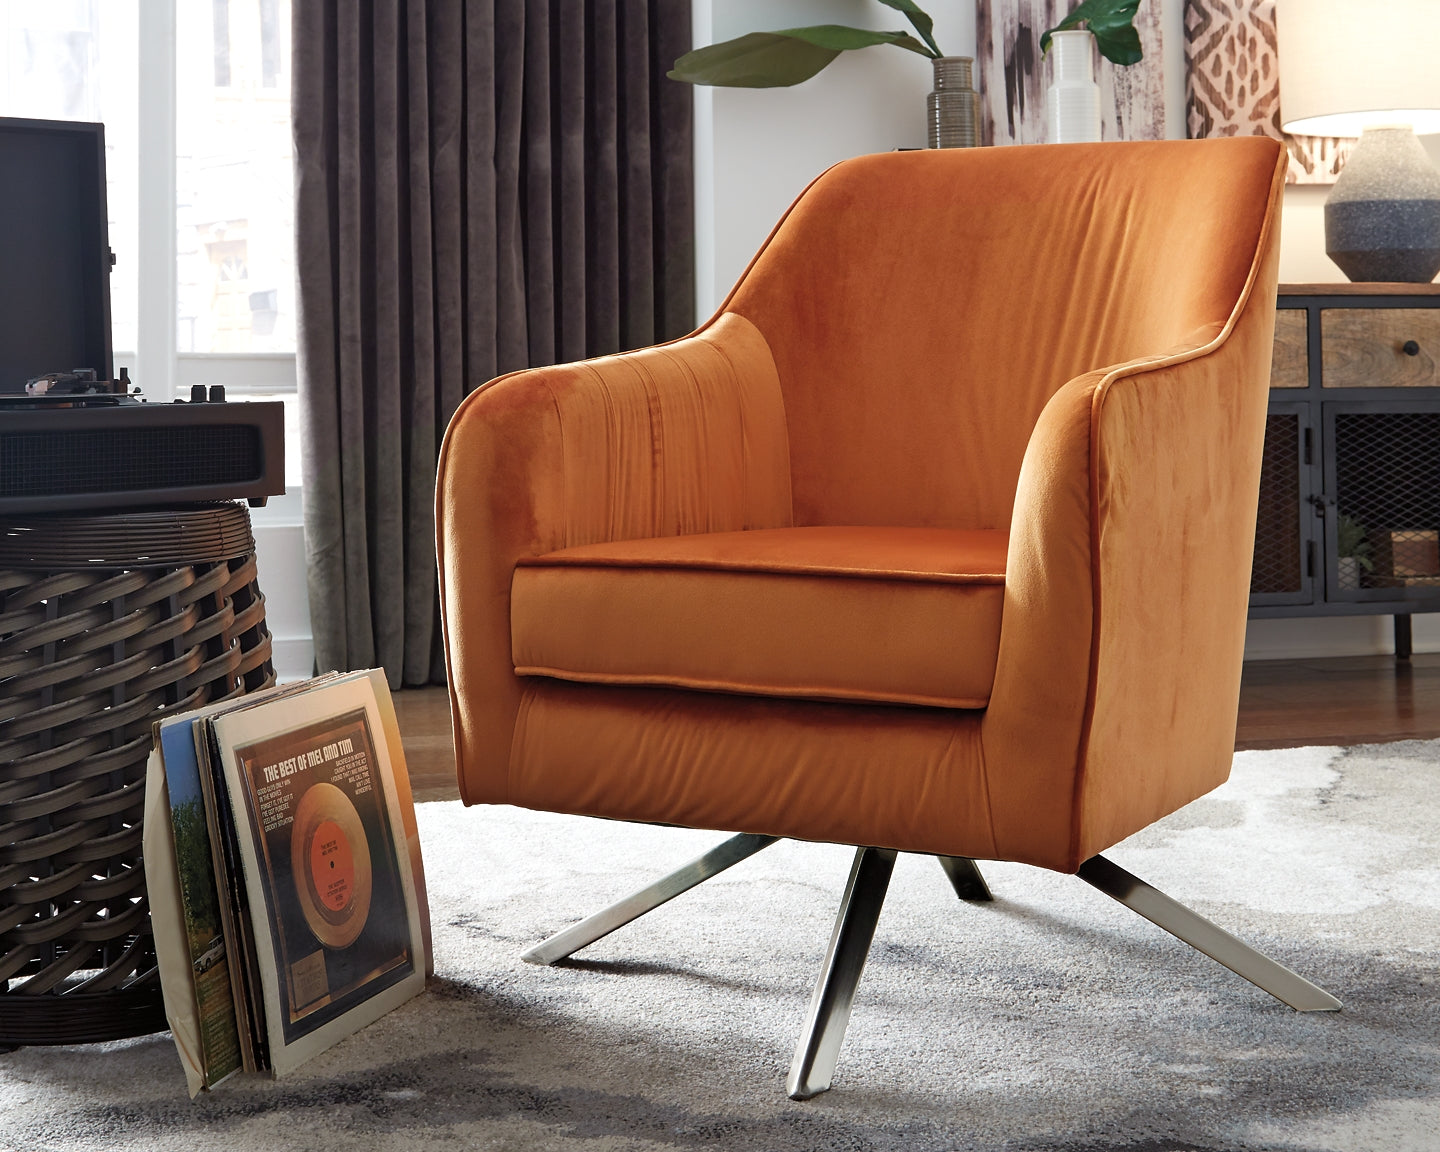 Hangar Accent Chair at Cloud 9 Mattress & Furniture furniture, home furnishing, home decor